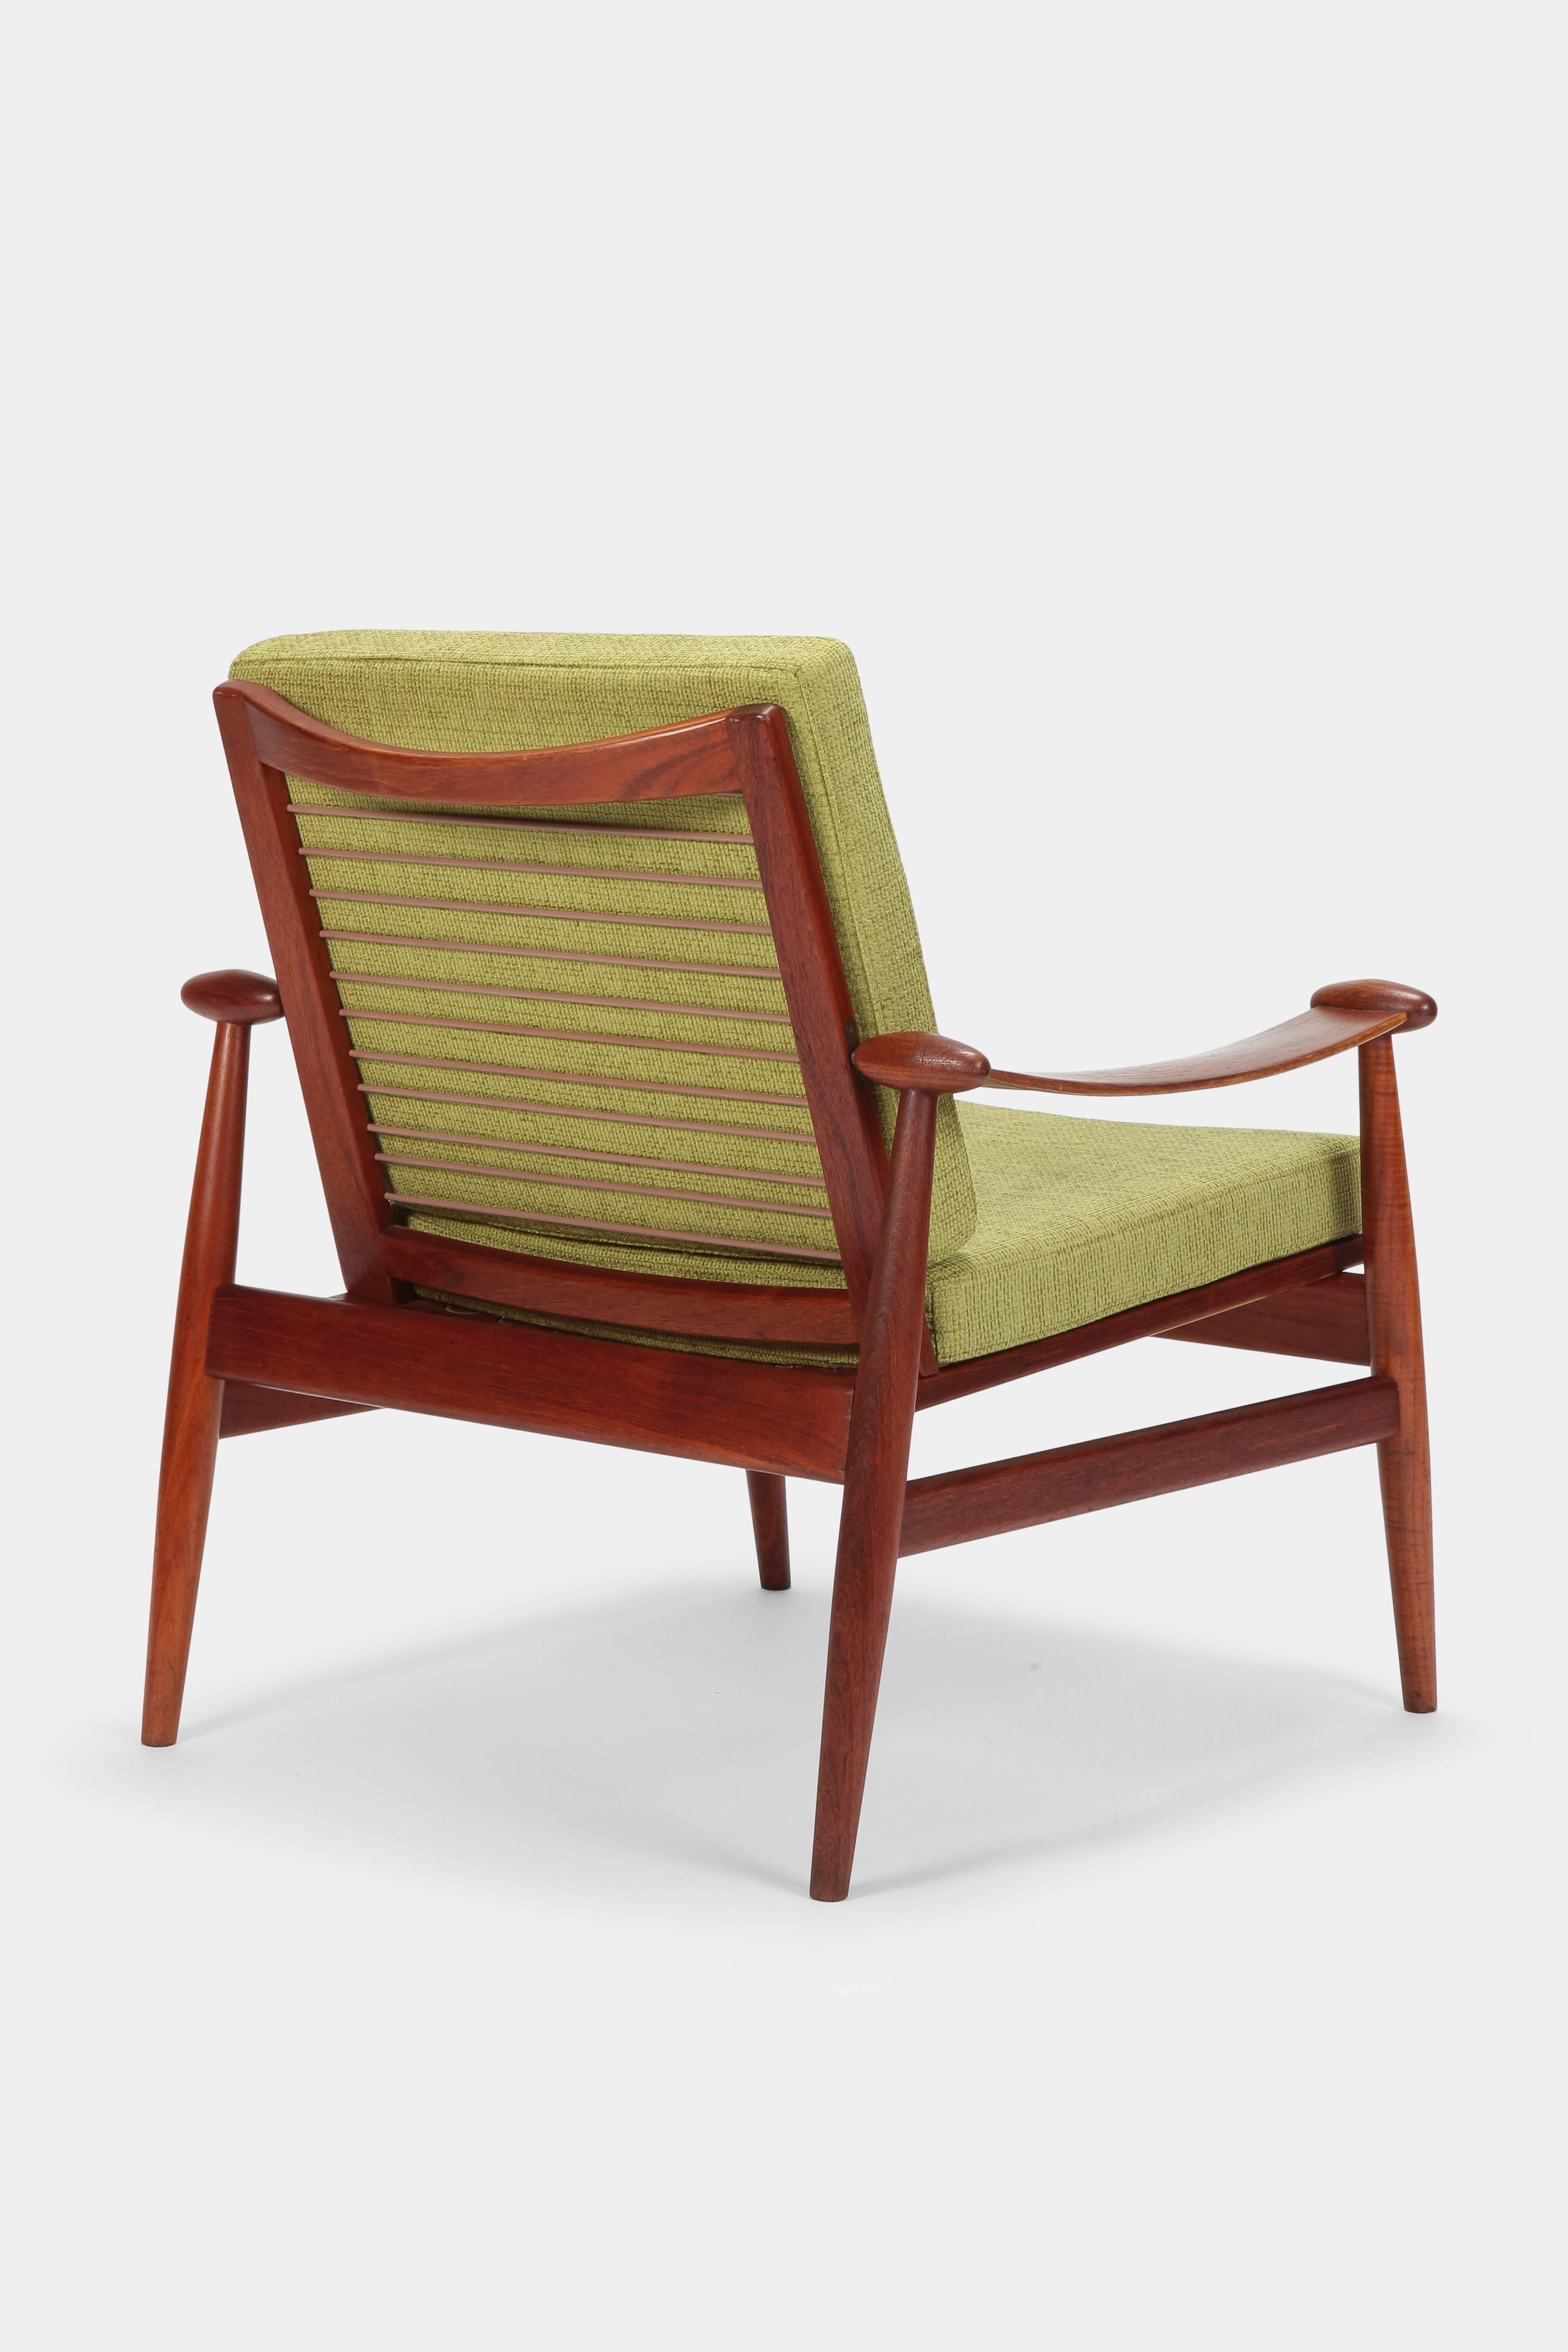 Finn Juhl “Spade” Lounge Chairs France & Daverkosen, 1960s 2